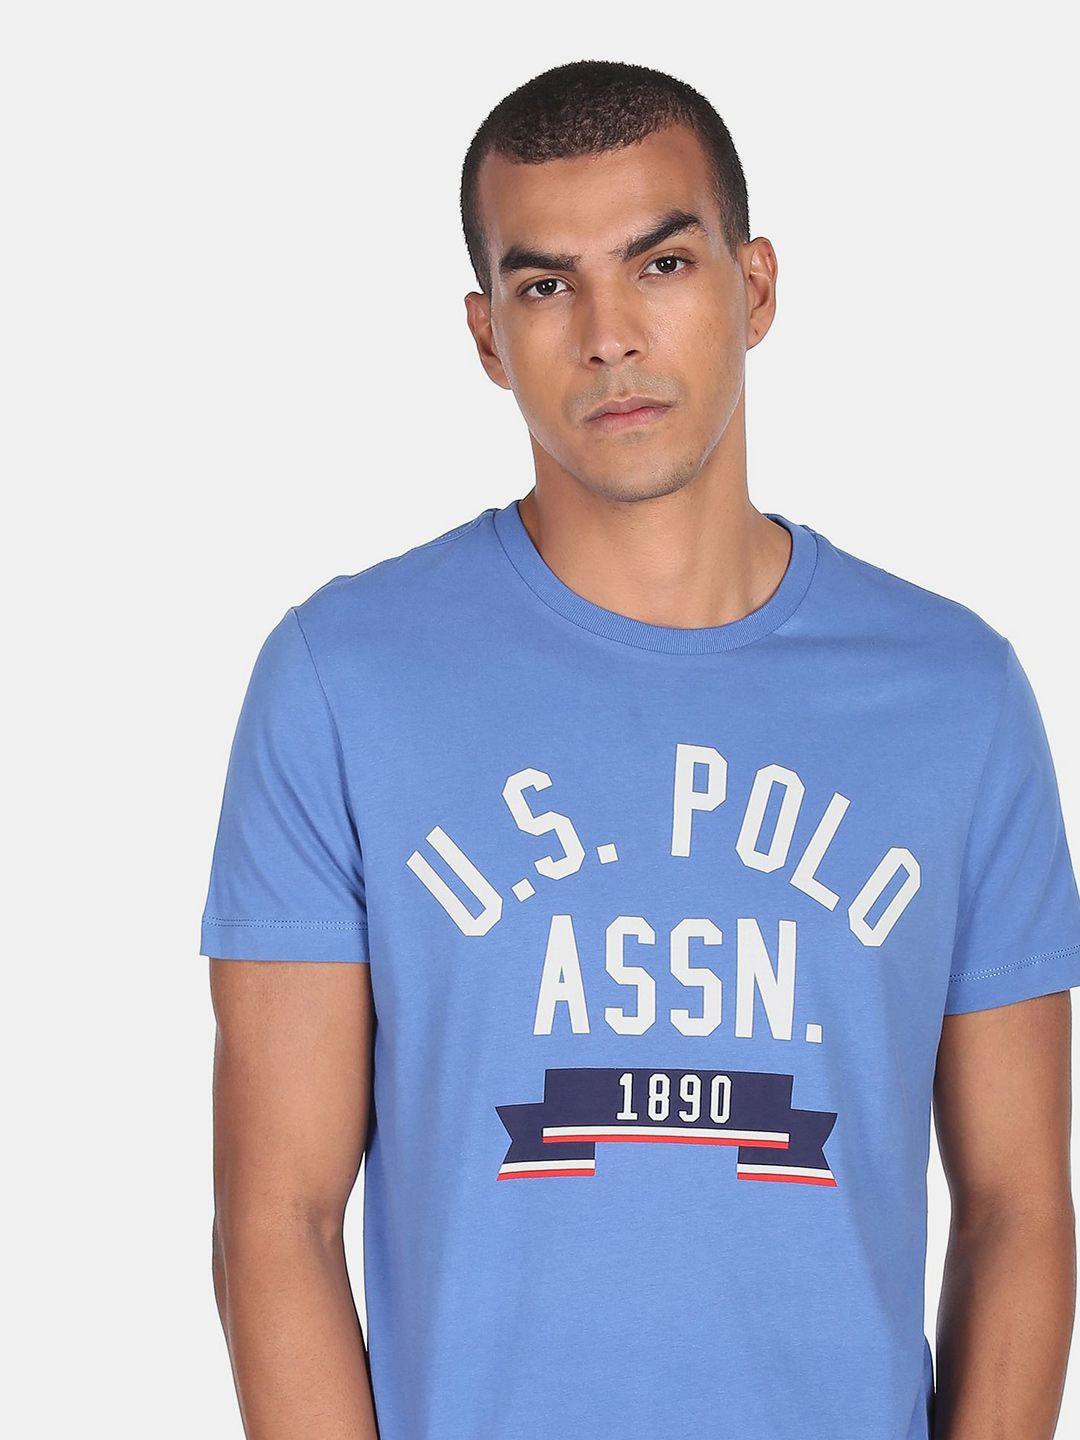 u.s. polo assn. denim co.men blue typography printed pure cotton t-shirt